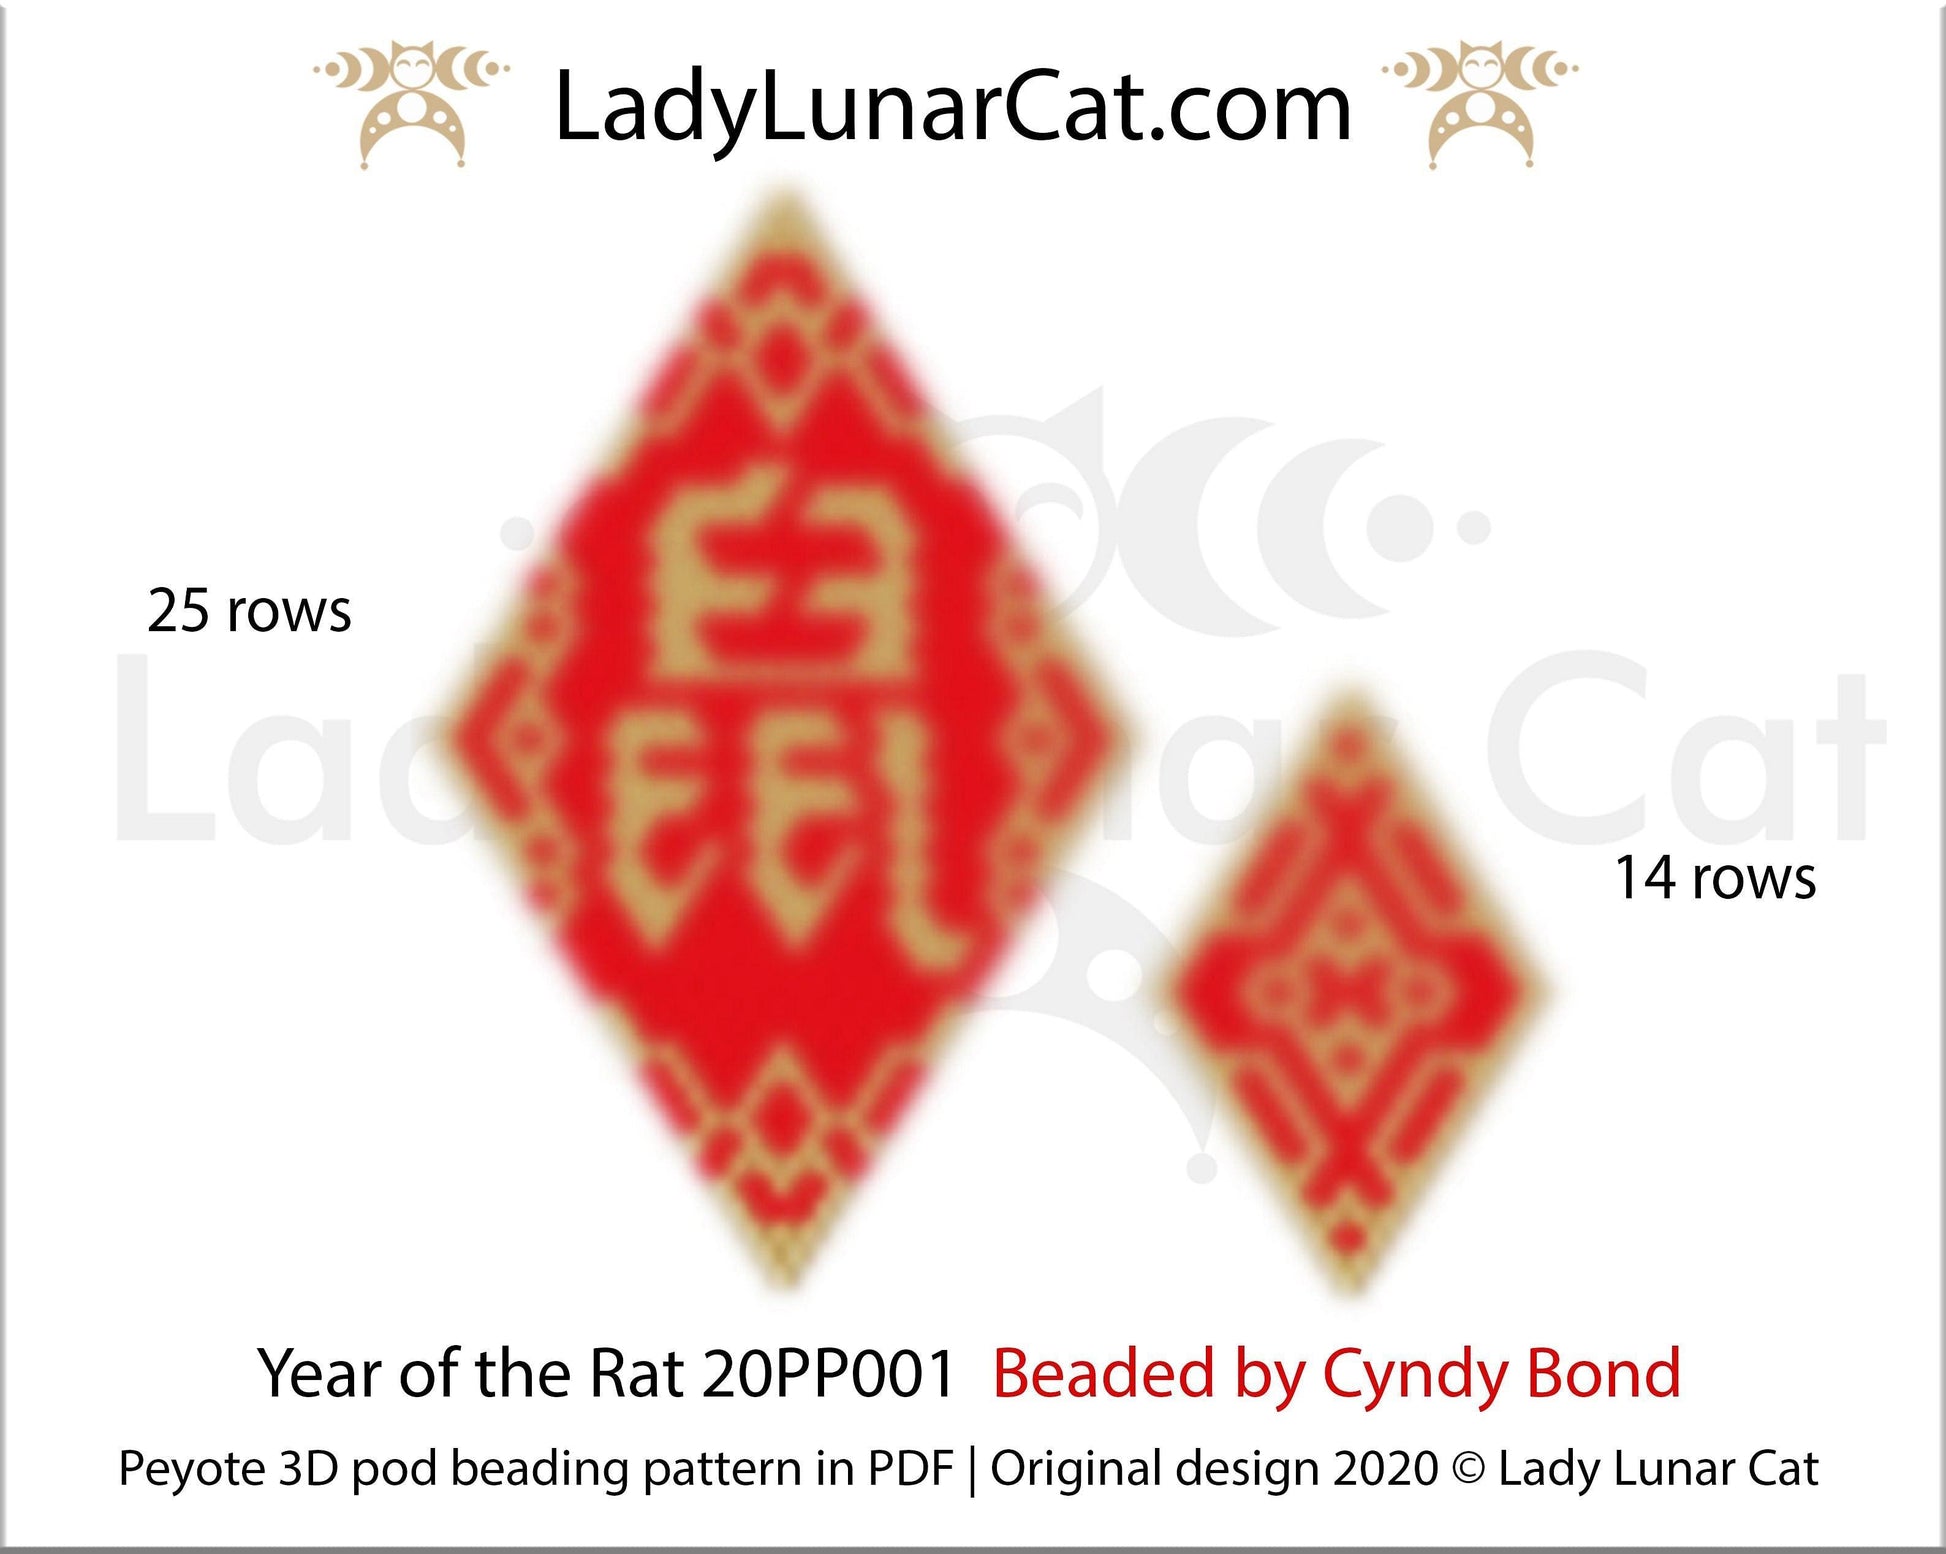 Peyote pod patterns for beading Year of the rat LadyLunarCat